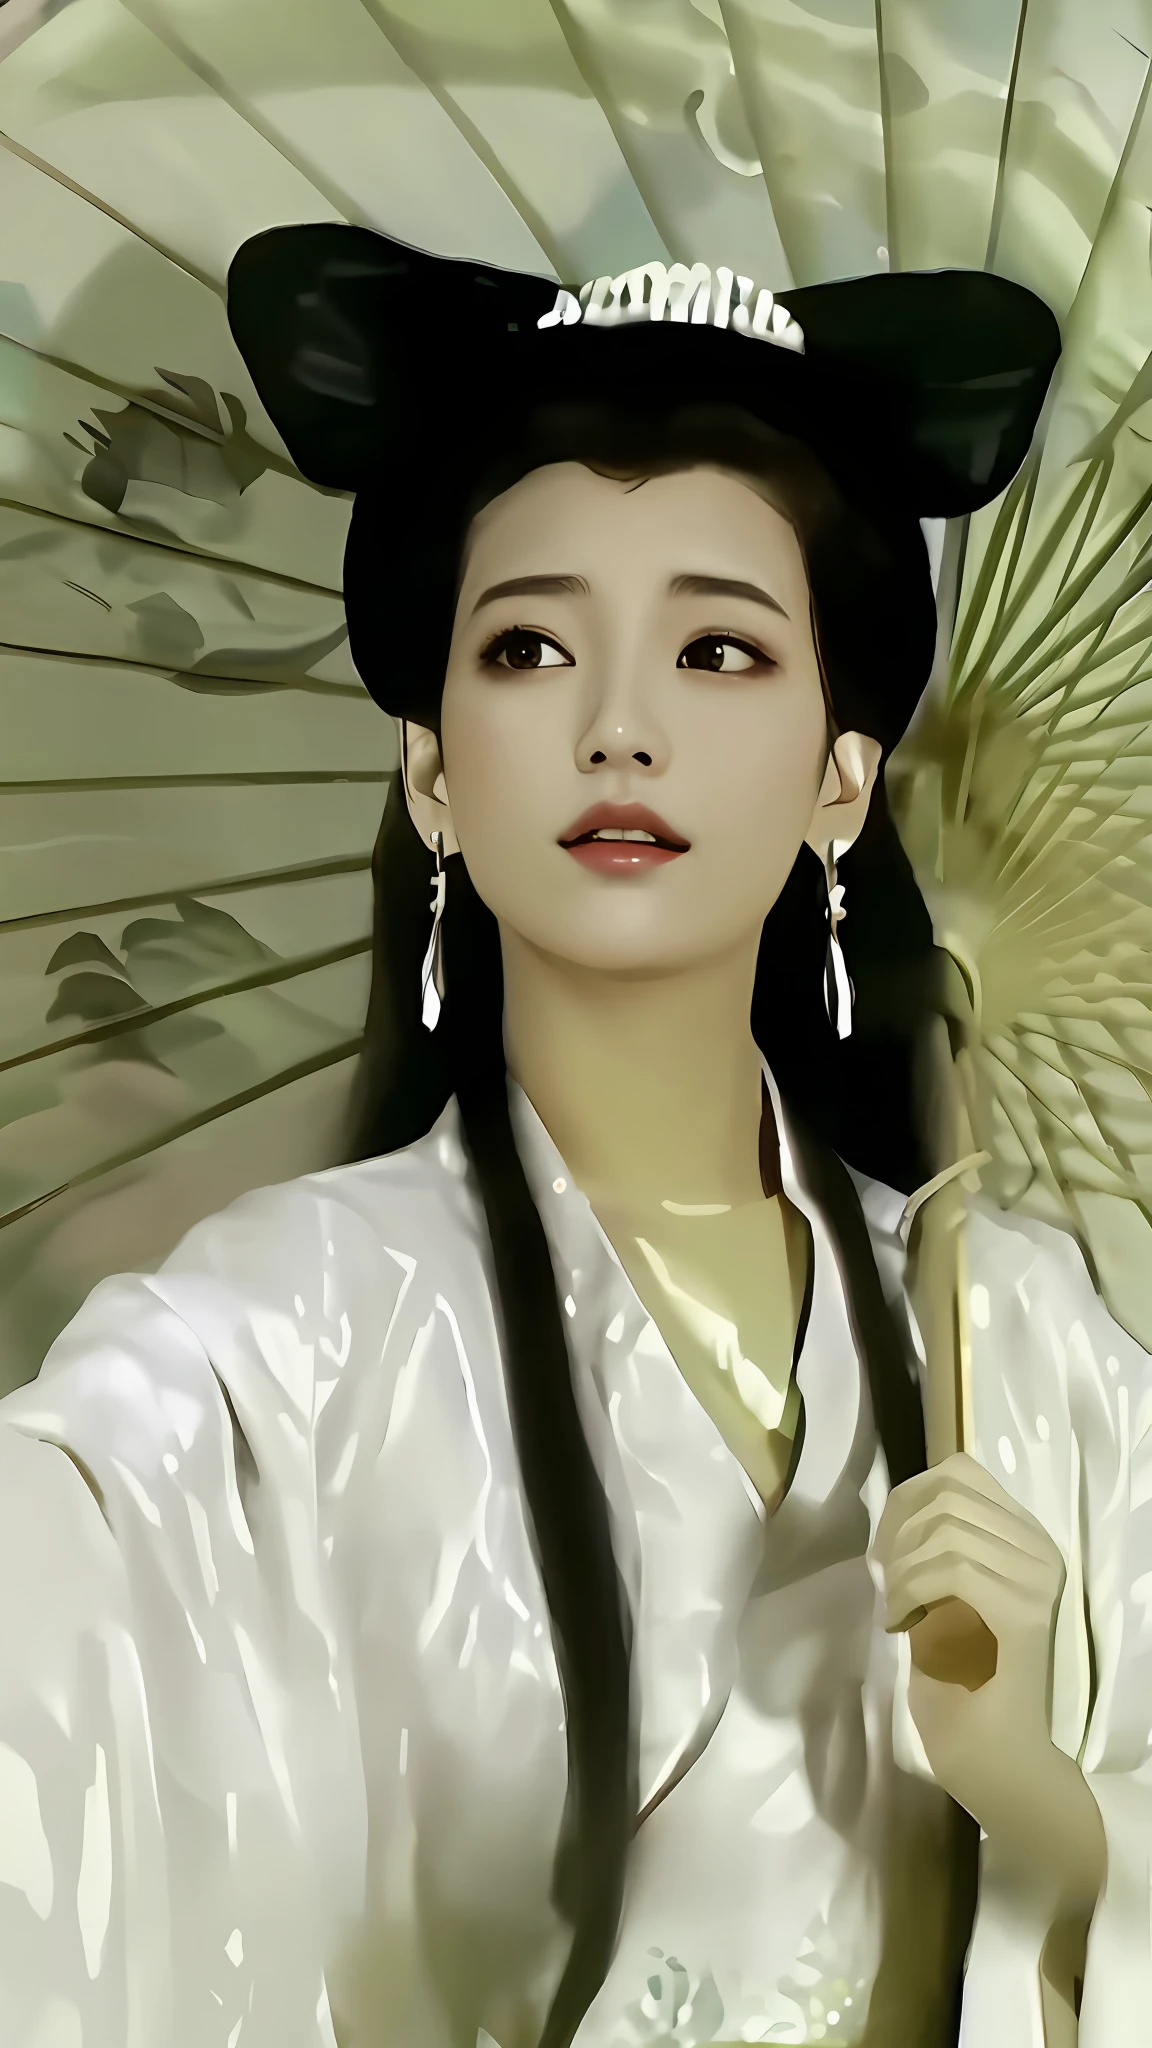 Arad femme en robe blanche tenant un parasol, inspiré par Chen Yifei, inspiré de Du Qiong, beauté chinoise ancienne, inspiré par Qiu Ying, Ancienne princesse chinoise, inspiré de Lan Ying, inspiré par Wu Bin, inspiré par Zhang Yan, inspiré par Yun Du-seo, inspiré par Zhang Yin, Heise-lian Yan Fang, Gong Li